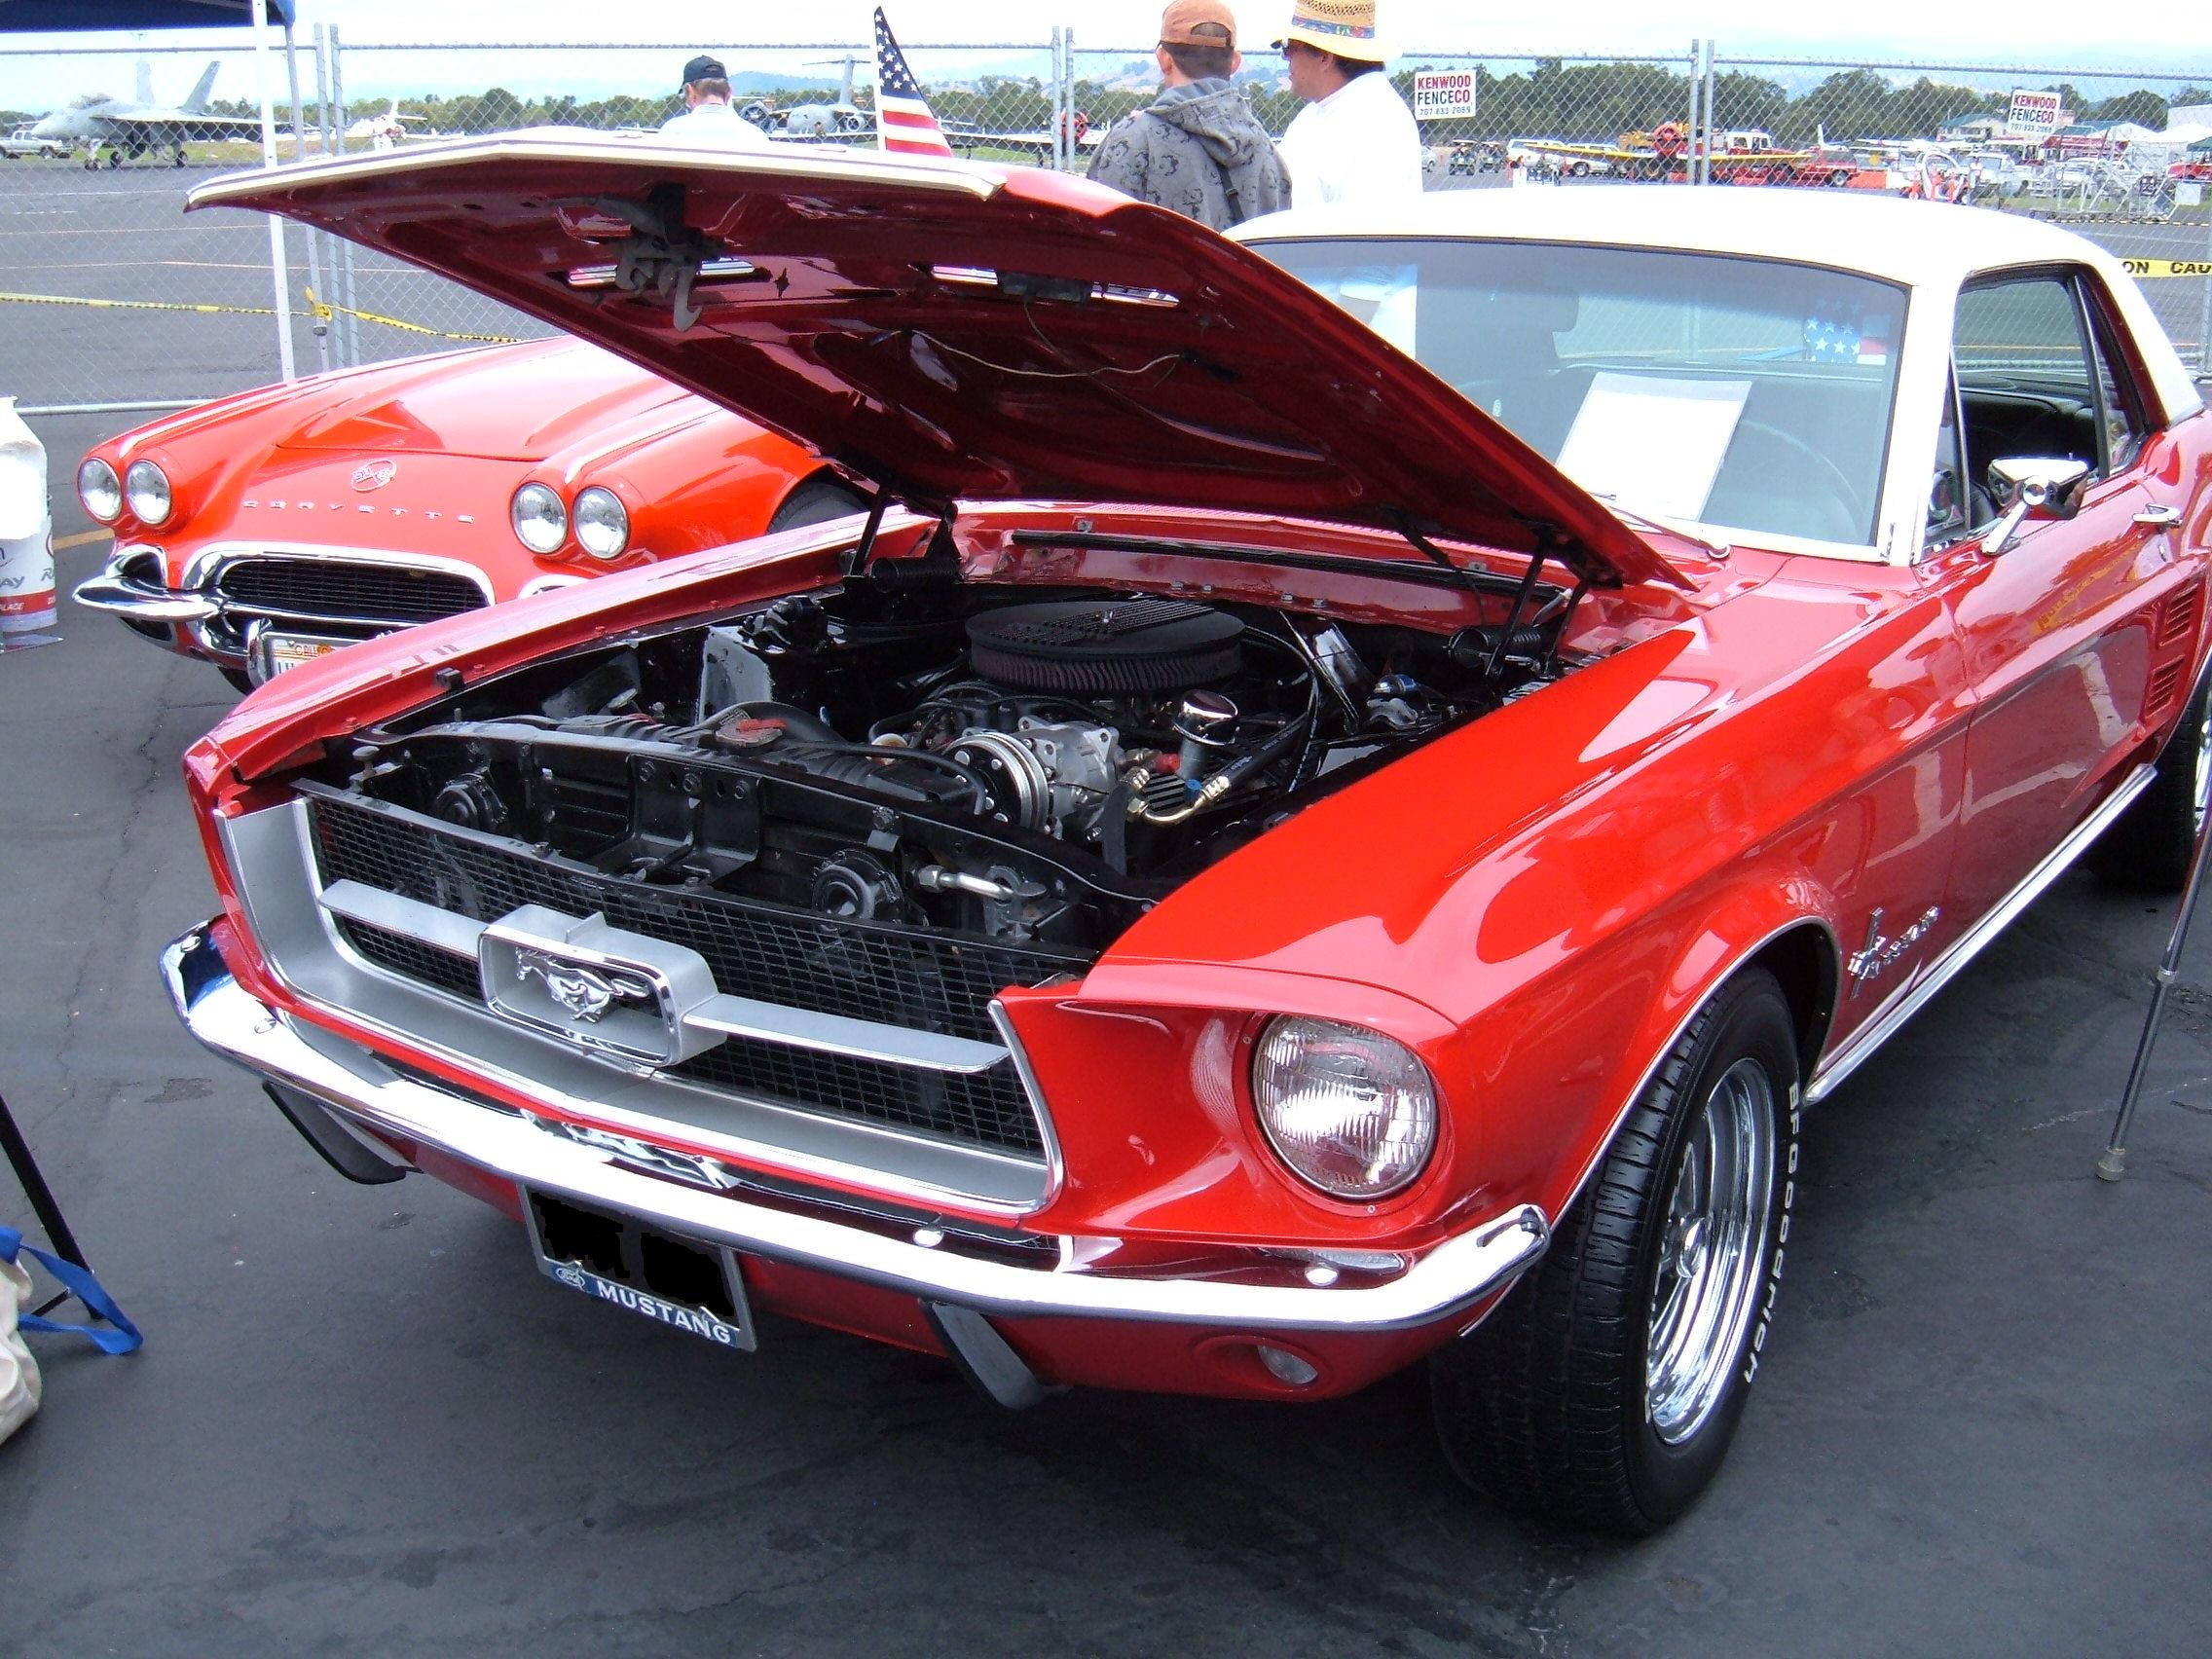 Мустанг моторы. Форд Мустанг 1967. Ford Mustang 1967 engine. Ford Mustang 1967 красный. Двигатель Ford Mustang 1967.